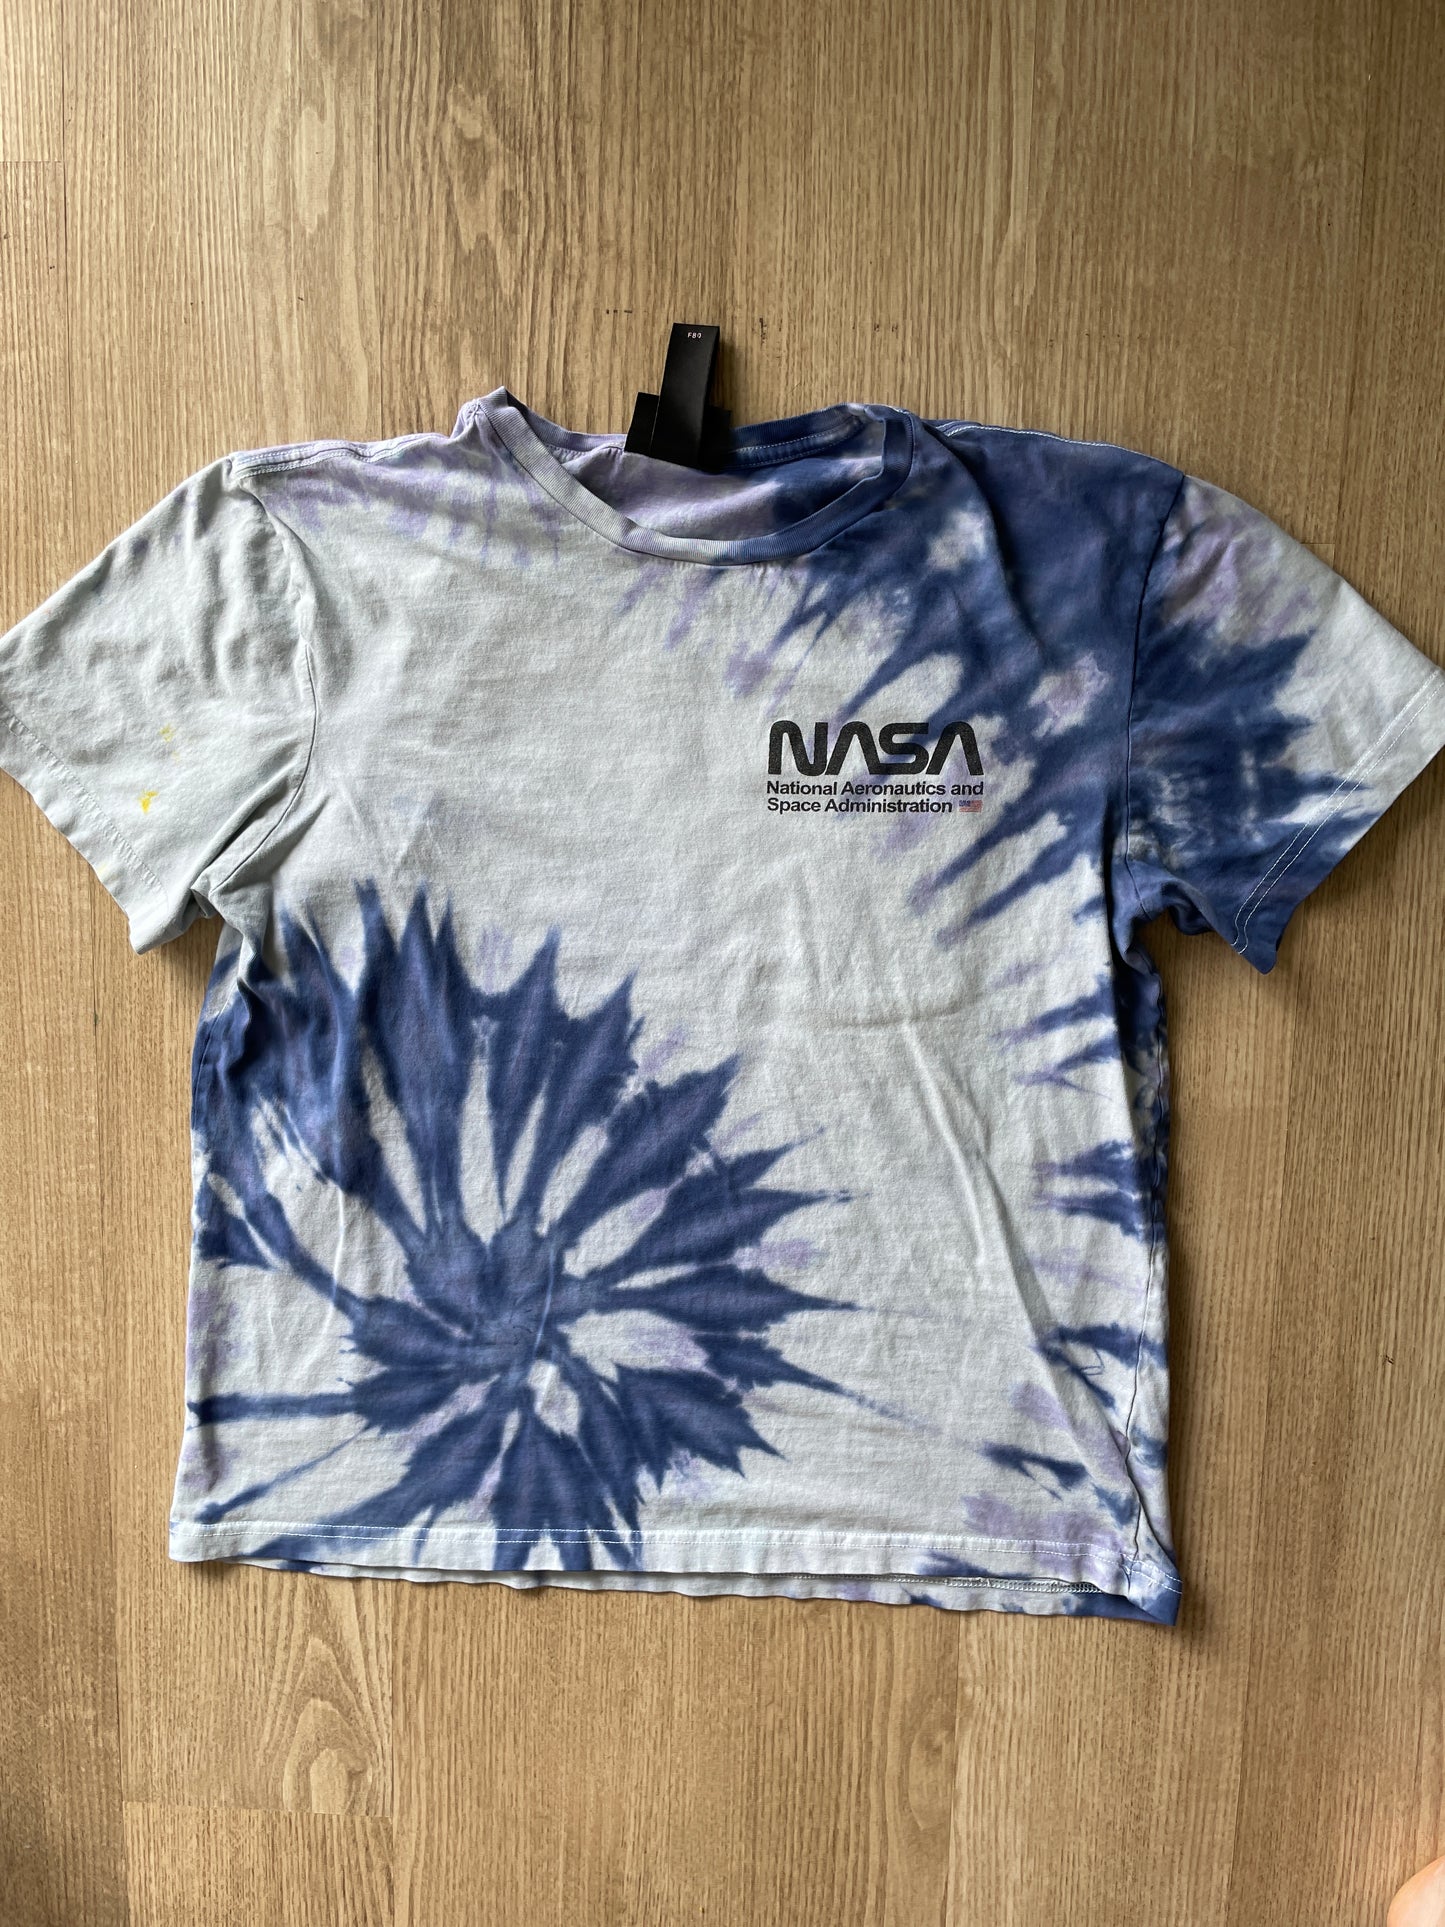 MEDIUM Men’s NASA USA Flag Handmade Tie Dye T-Shirt | One-of-a-Kind Purple and Blue Spiral Short Sleeve Top